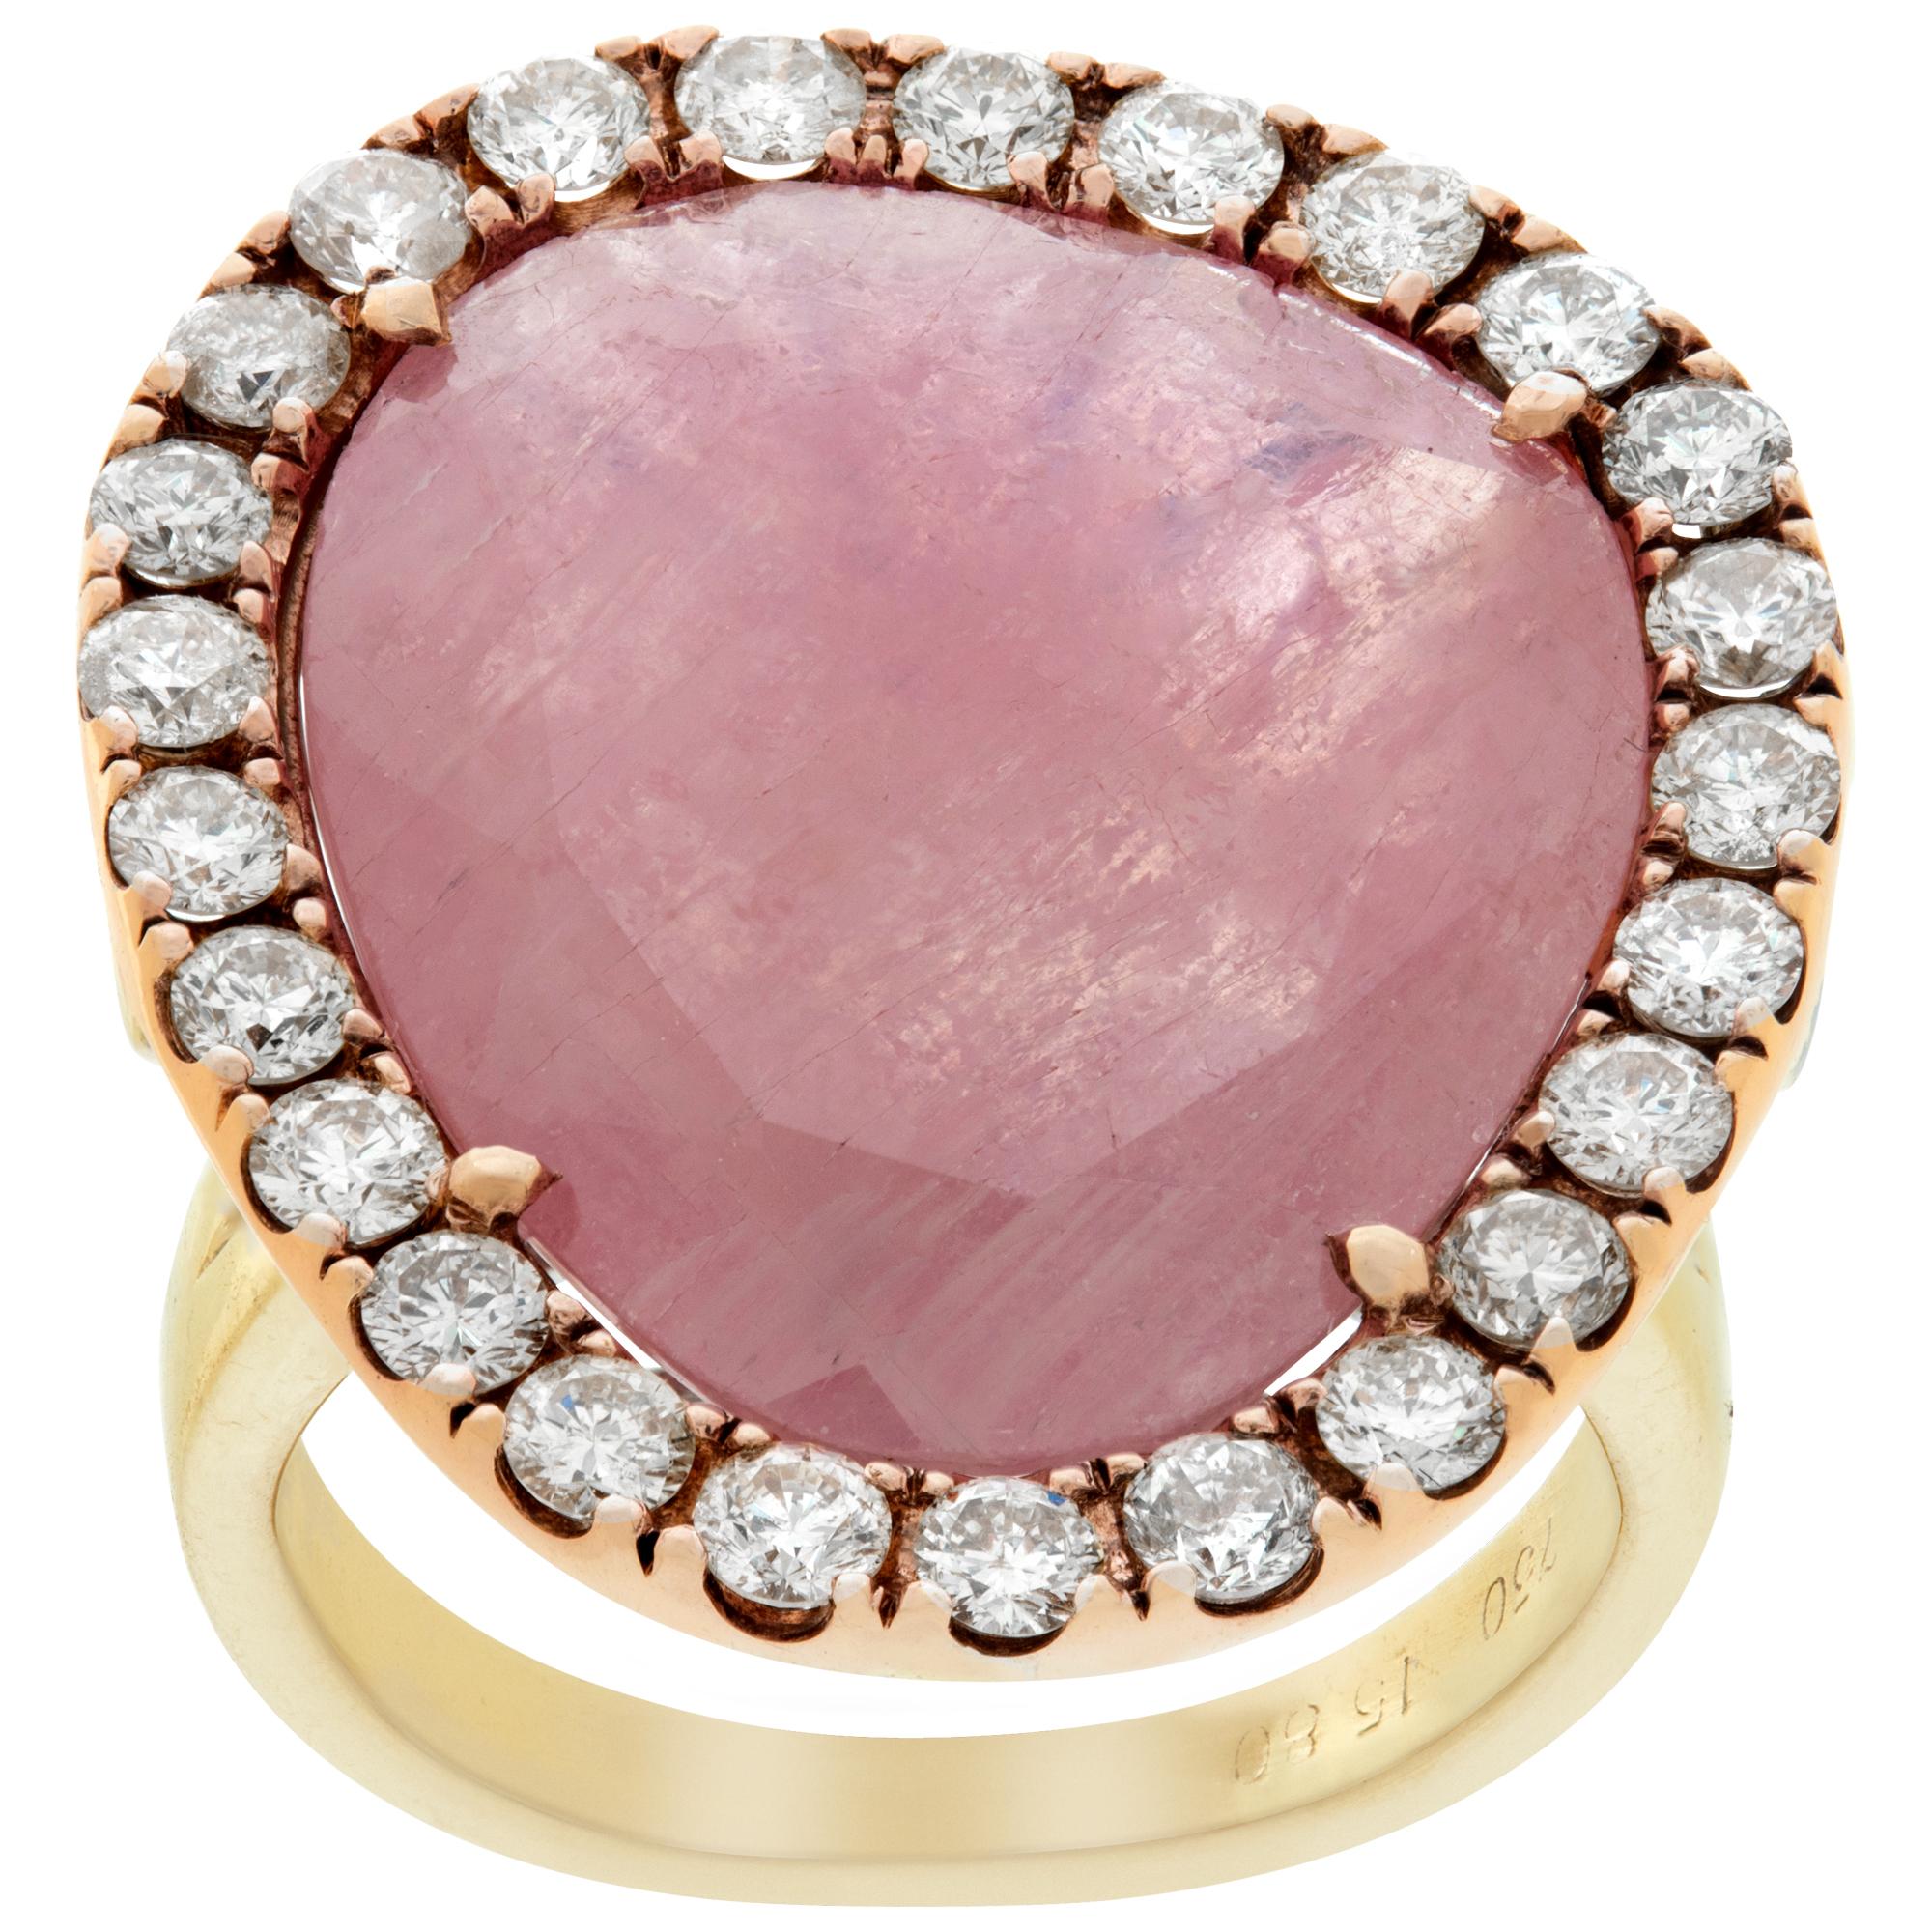 Rose quartz faceted ring w/ 1.00ct in surrounding diamonds in white & rose gold